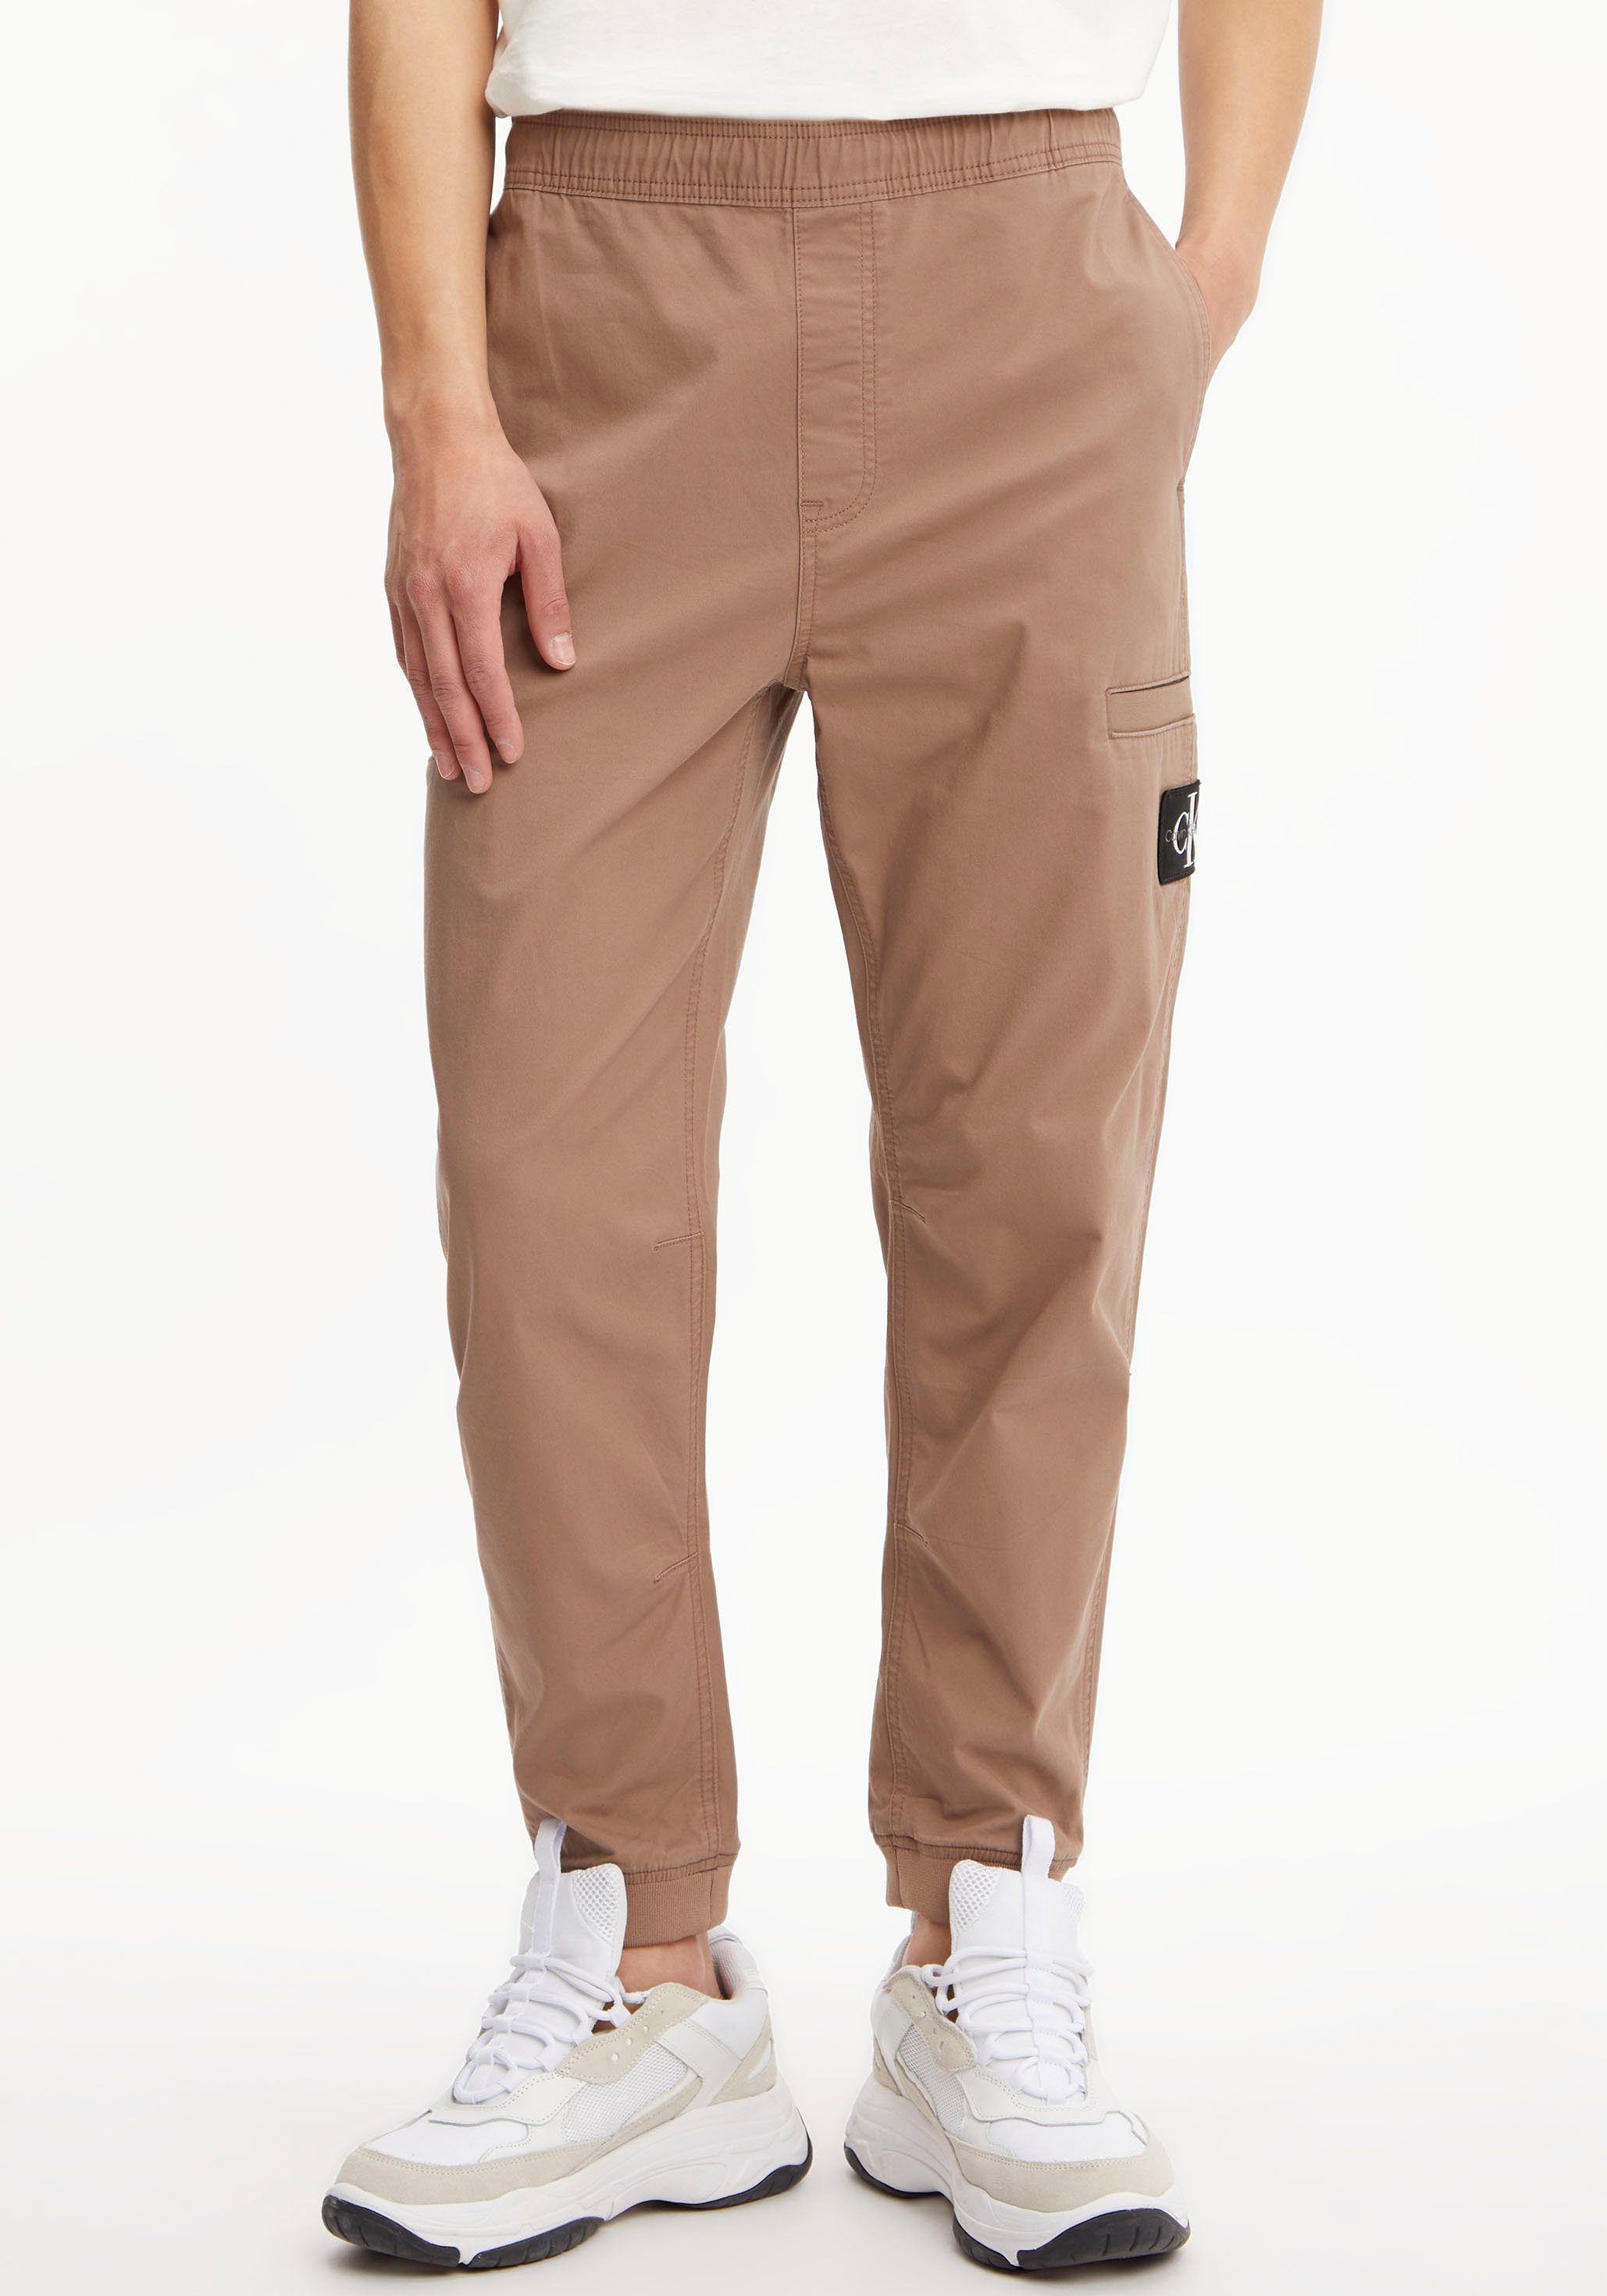 BADGE Klein Jeans WOVEN Calvin Klein Bein Jogginghose mit TRIM Calvin auf PANT dem ELASTIC Logo-Badge